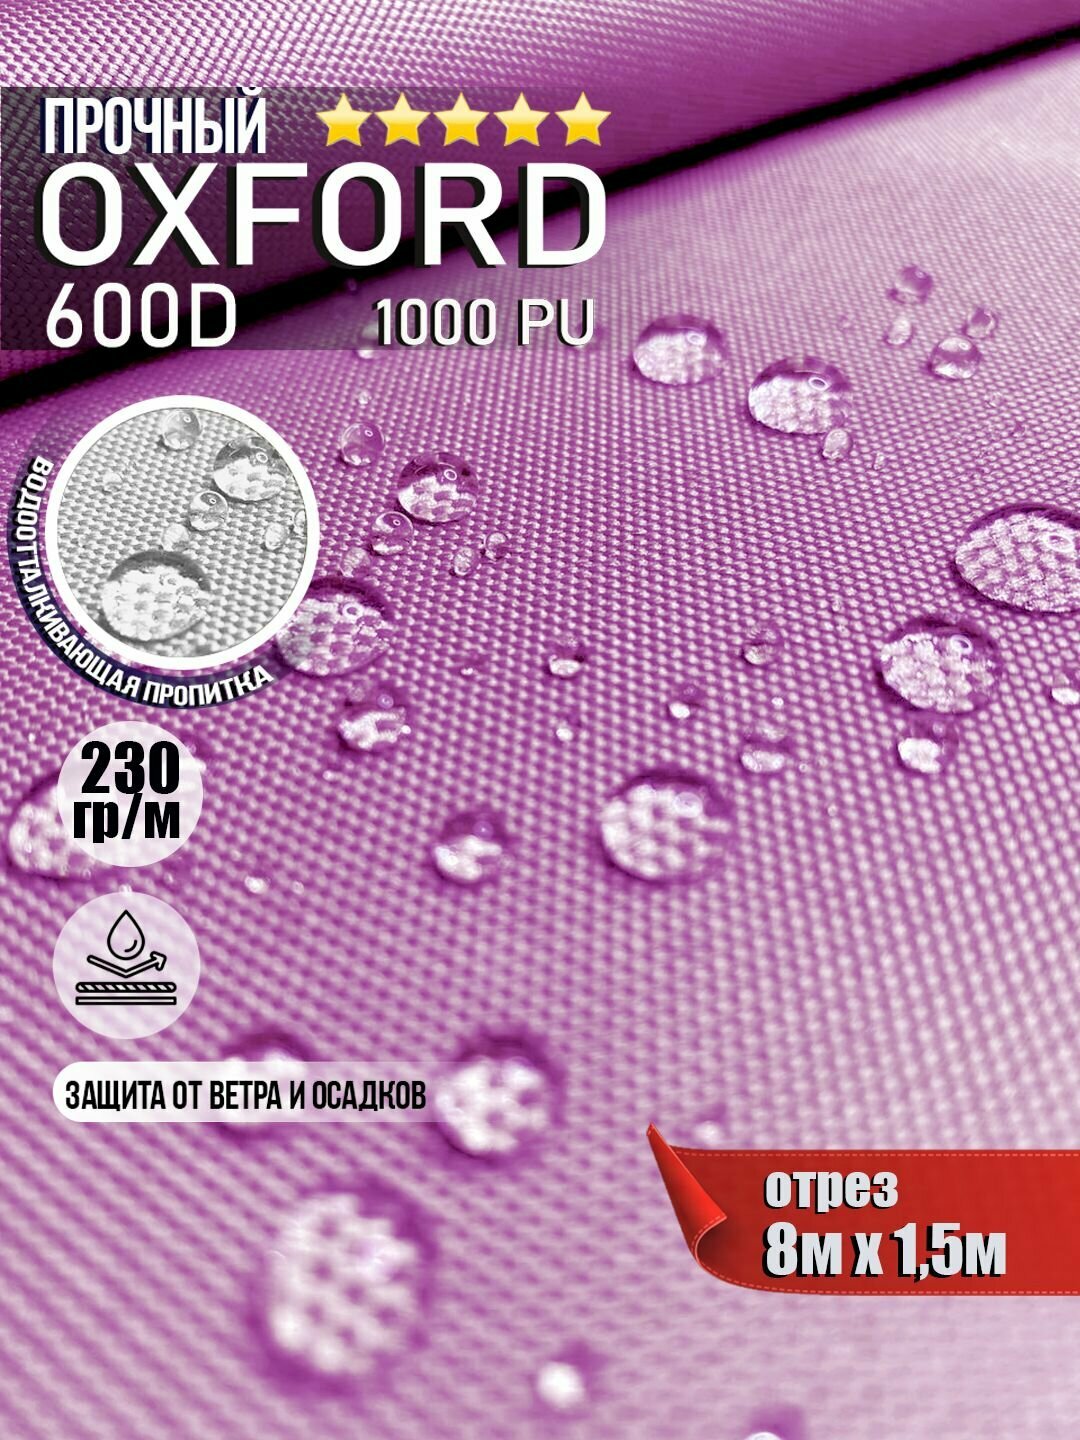 Ткань водоотталкивающая Oxford 600D PU 1000 230 гр/м, Оксфорд уличная тентовая (отрез 8 х 1,5м)